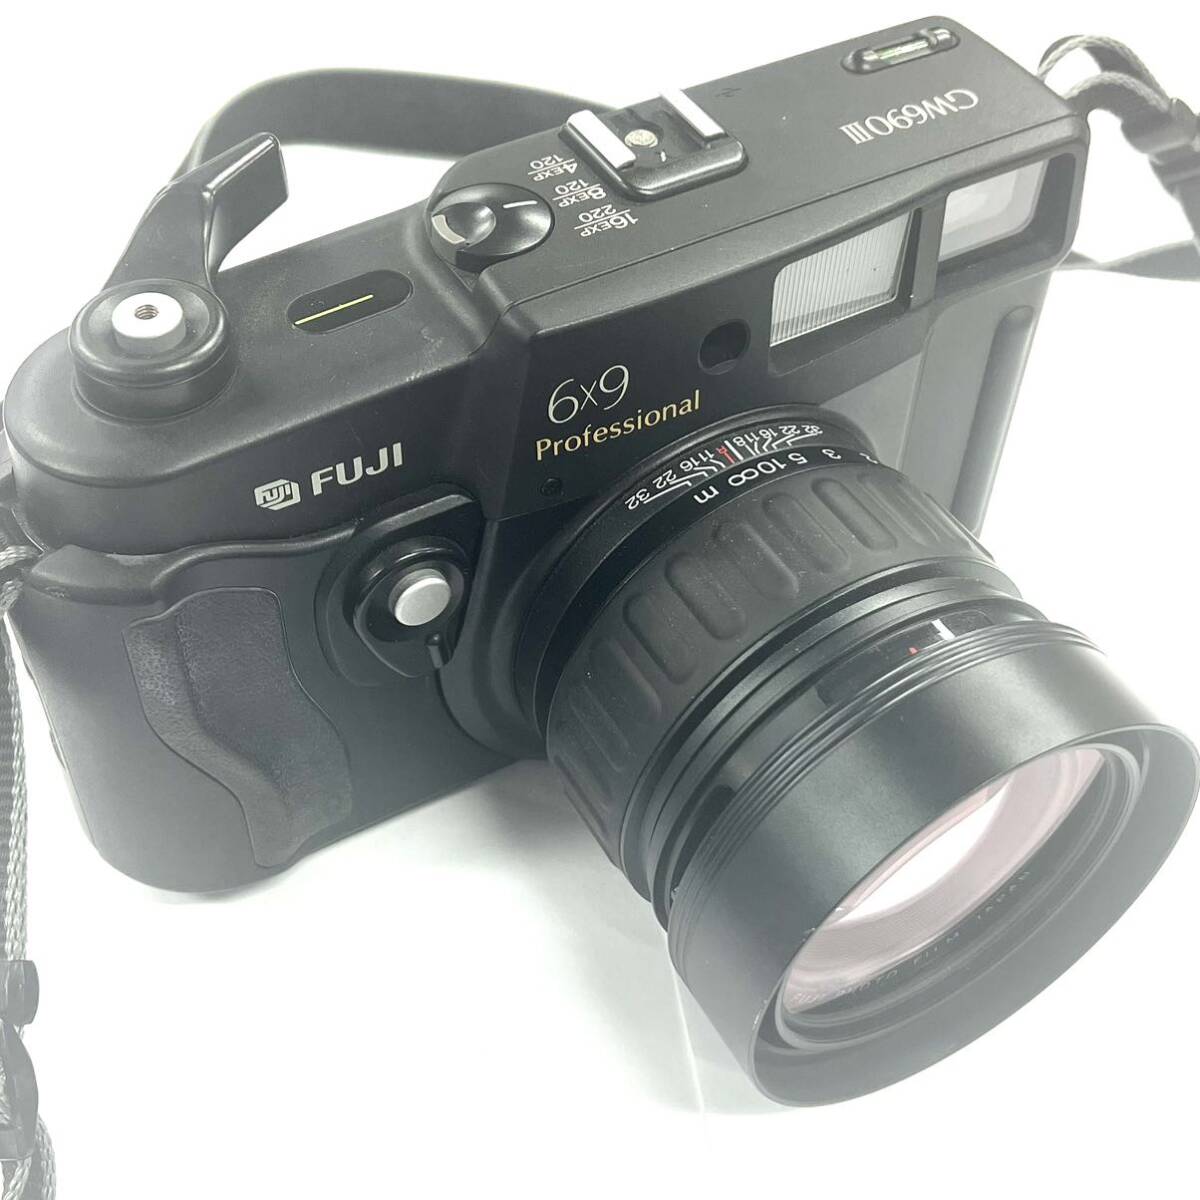 N386 フィルムカメラ FUJIFILM GW690III 6x9 Professional EBC FUJINON 1:3.5 f=90mm ジャンク品 中古 訳ありの画像10